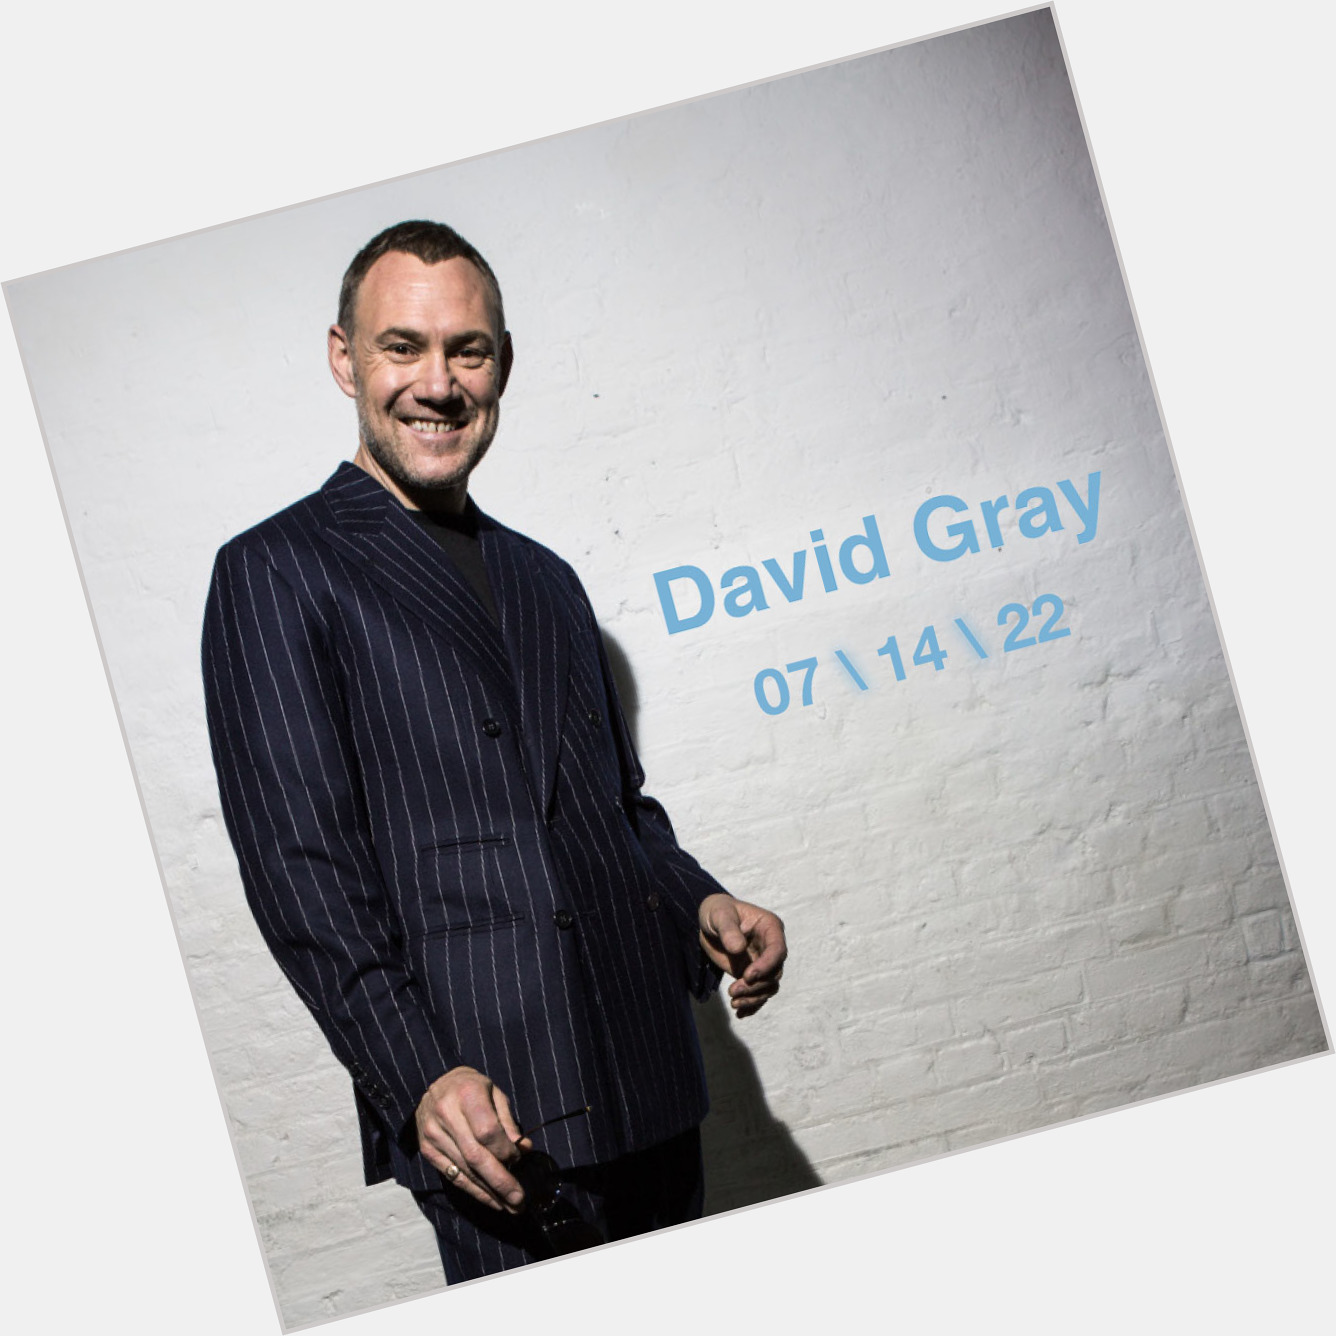 Happy birthday, David Gray! See you in a few weeks. Tix:  